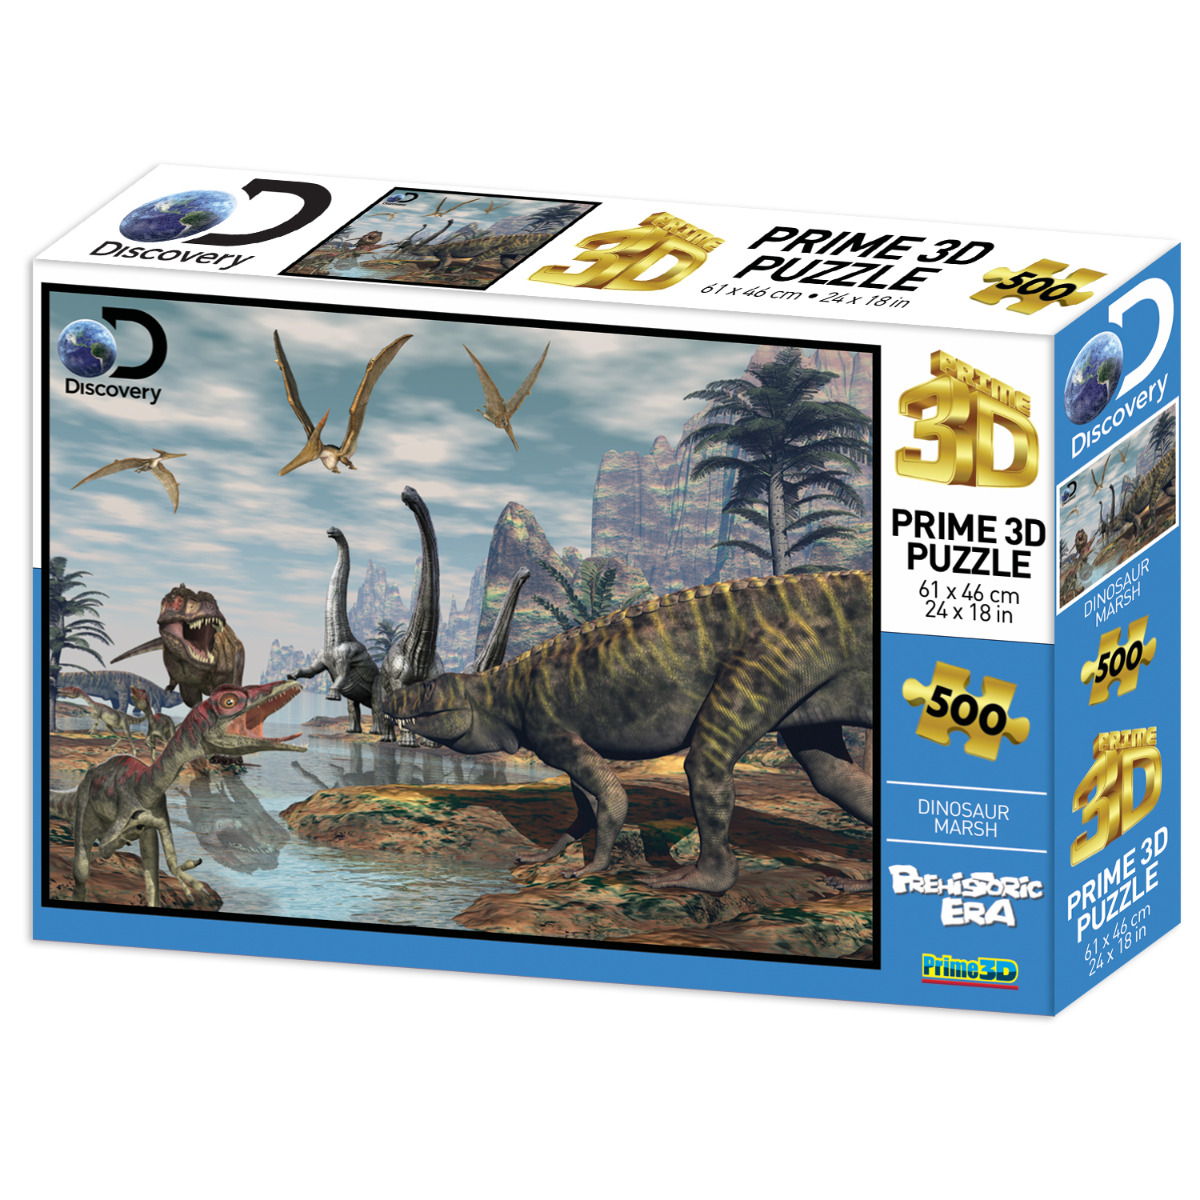 Prime 3D - Discovery - Dinosaur Marsh 500pcs Puzzle- TOYS UAE